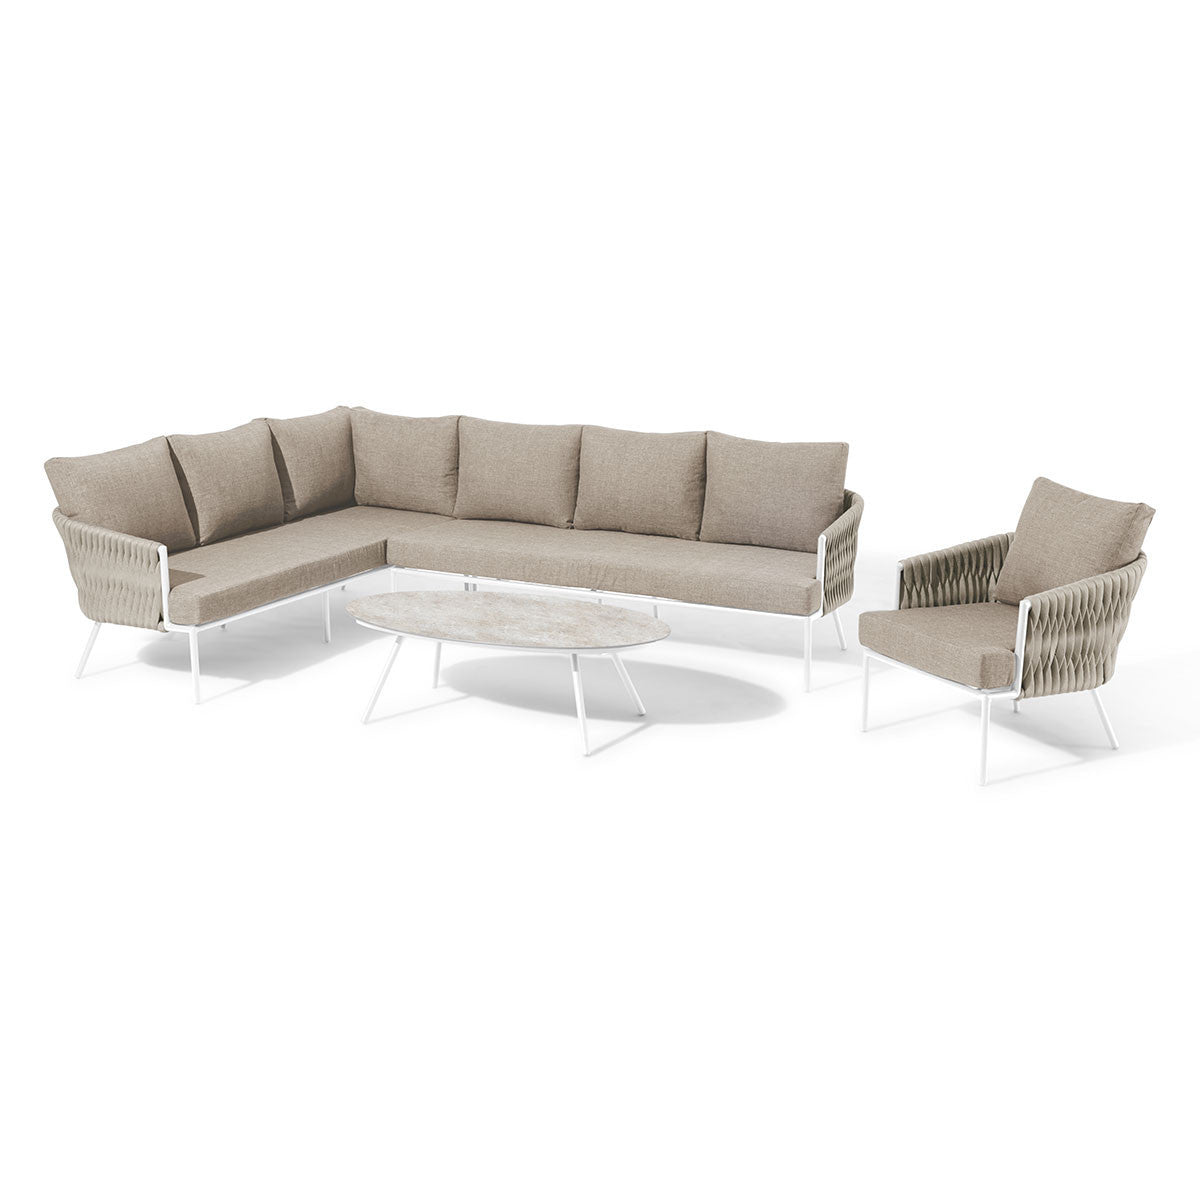 Marina Outdoor Fabric Corner Sofa Group with Armchair